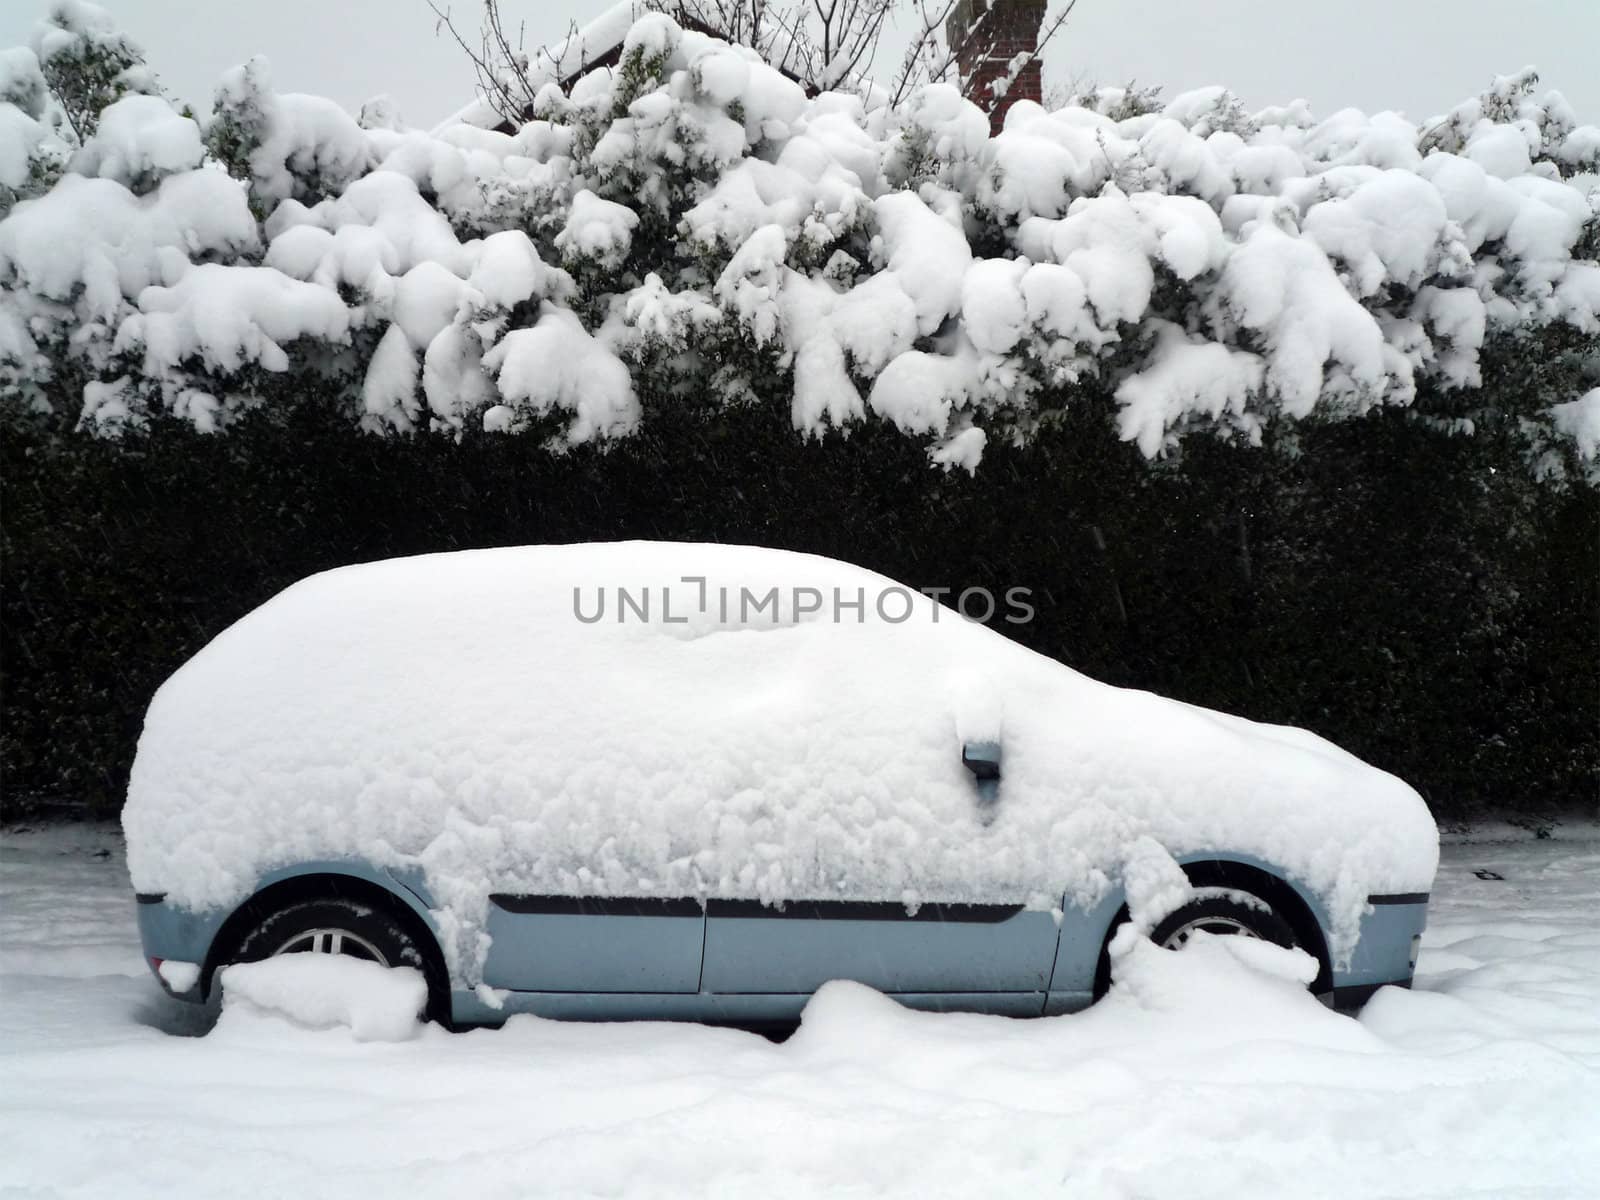 A car under the snow by dutourdumonde